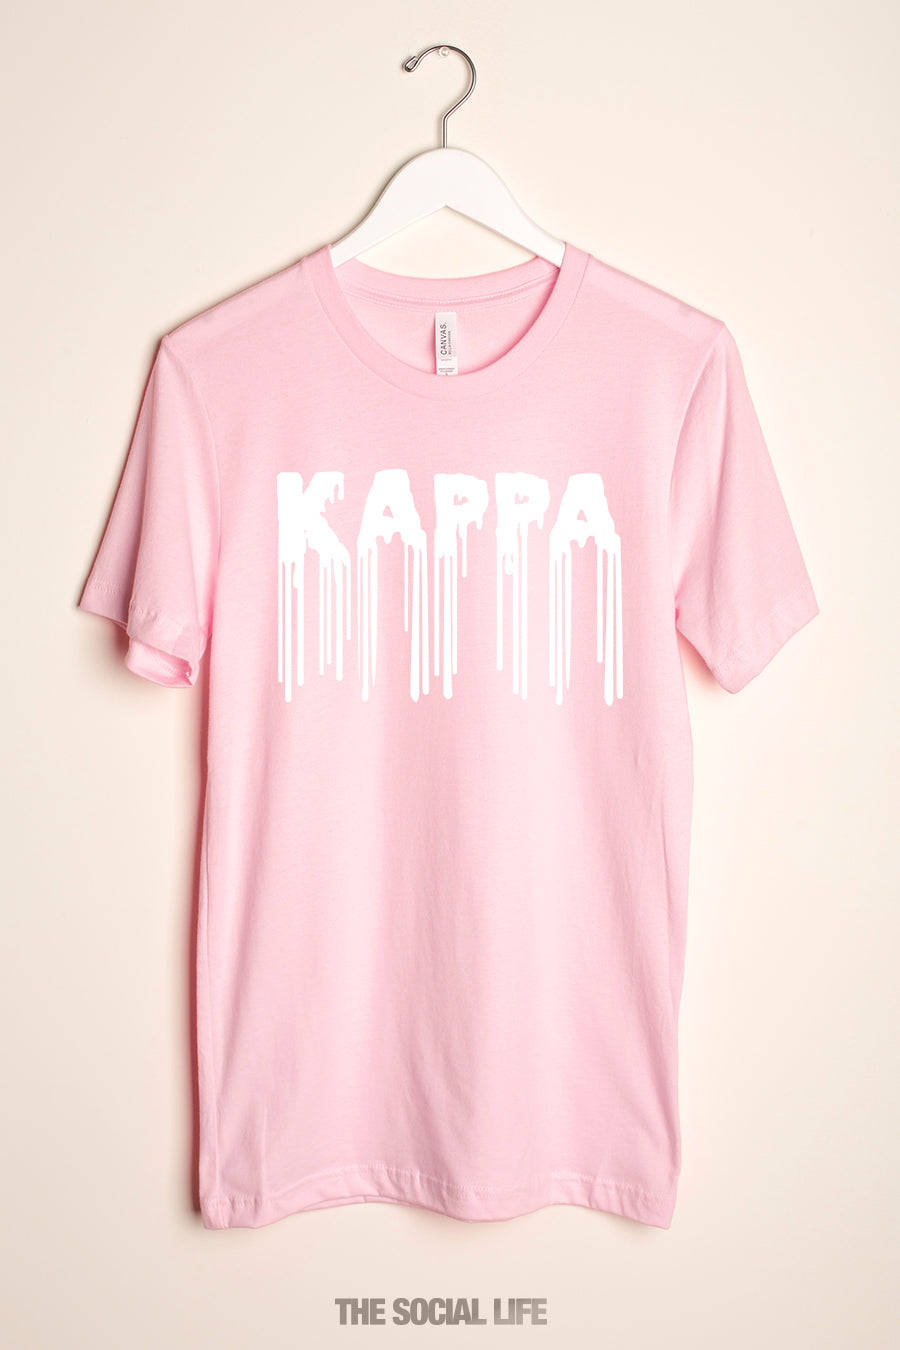 Onophoudelijk dubbele impliceren Kappa Kappa Gamma Drip Tee – The Social Life